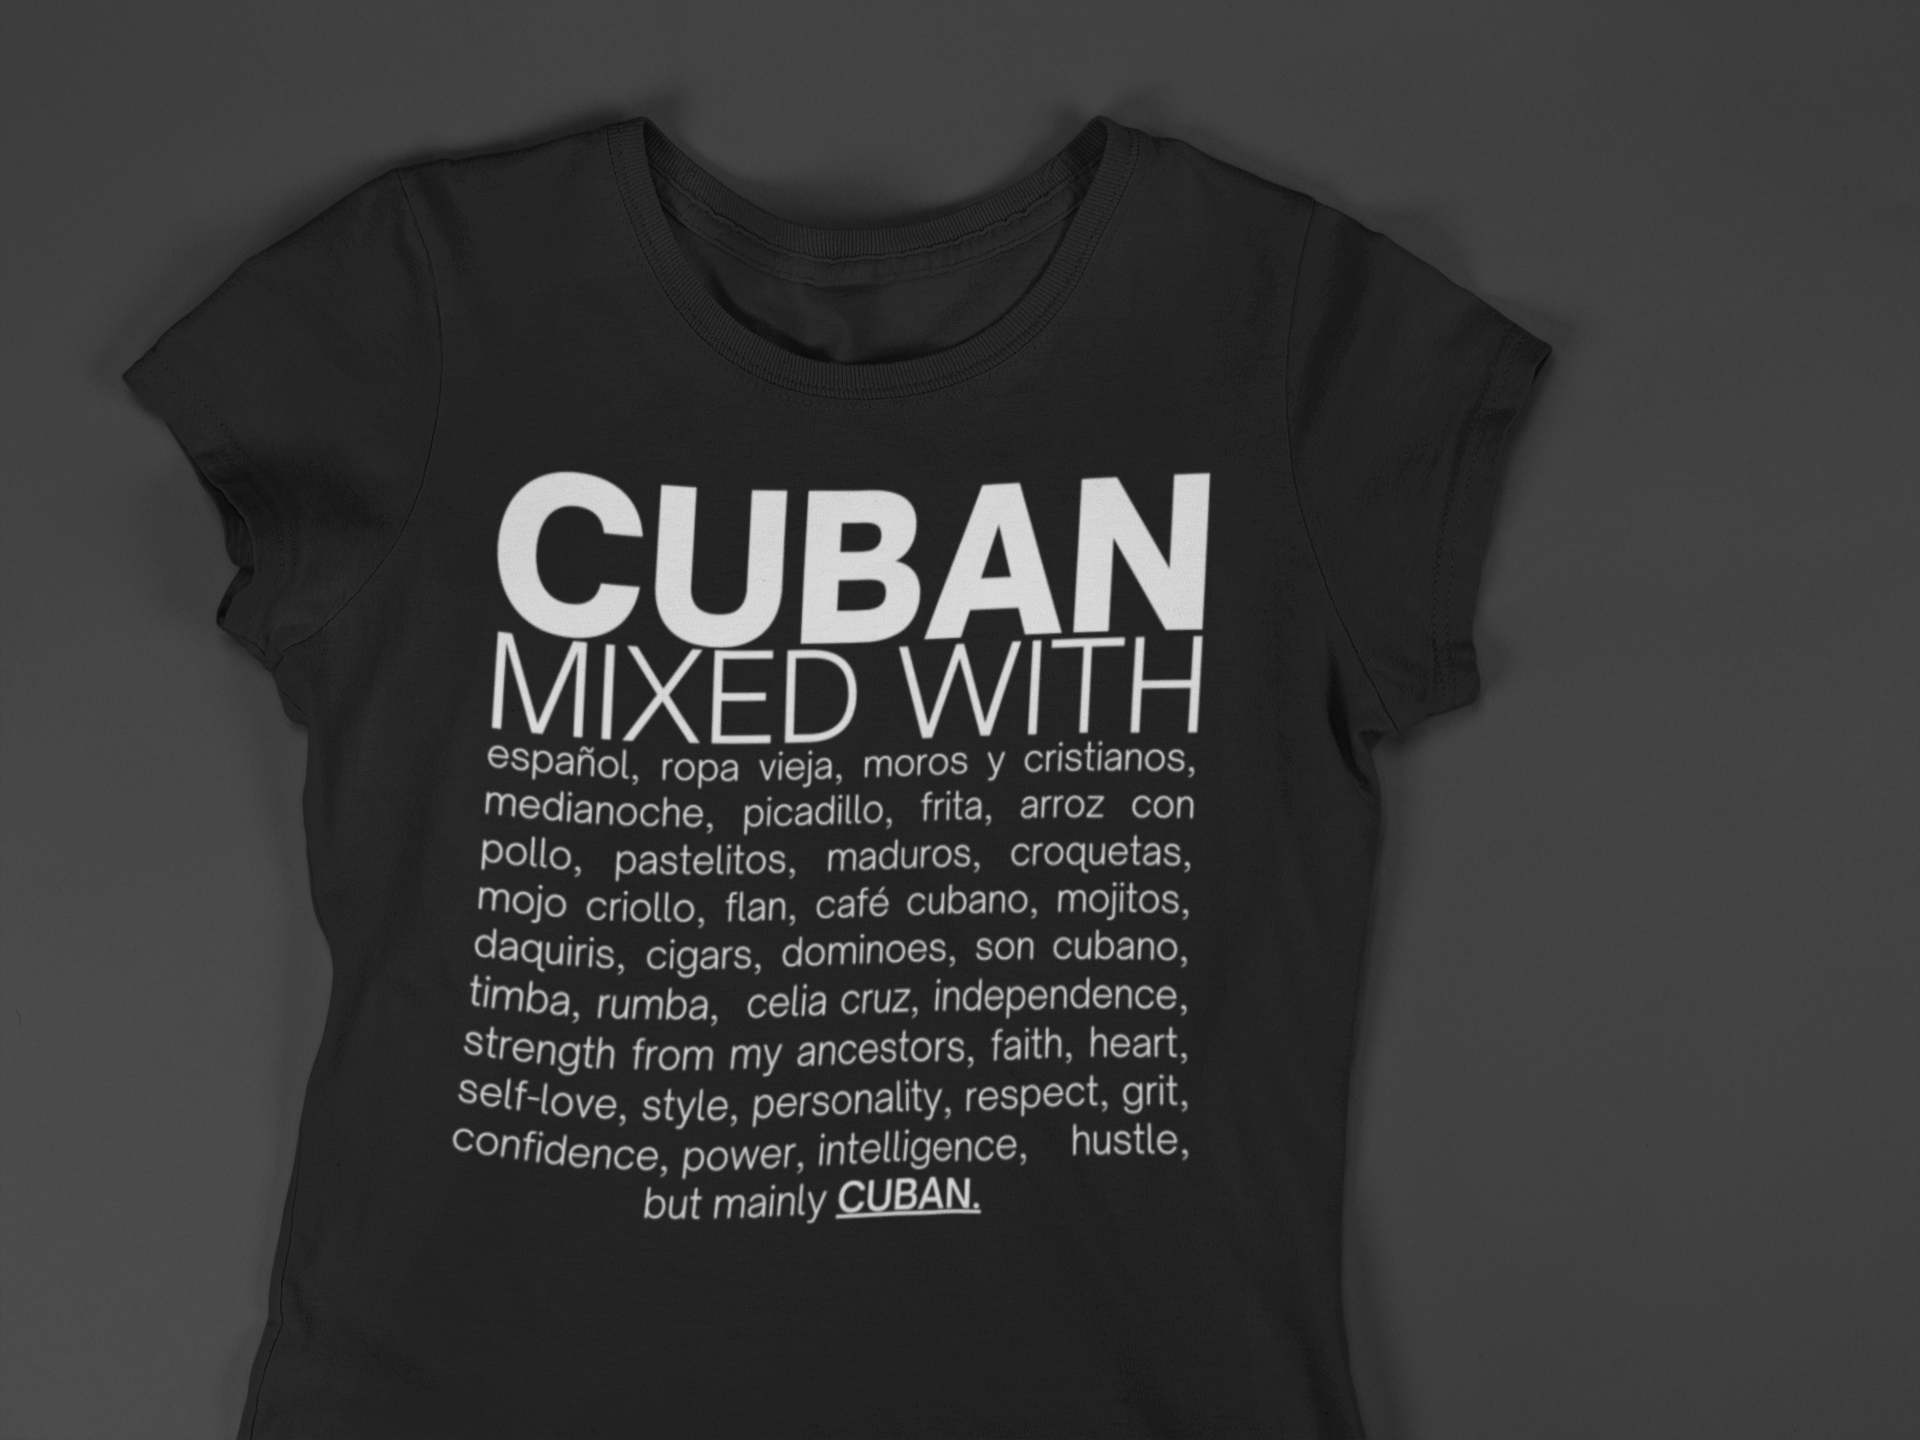 Cuban Mixed With "Ropa Vieja & Dominoes" T-Shirt